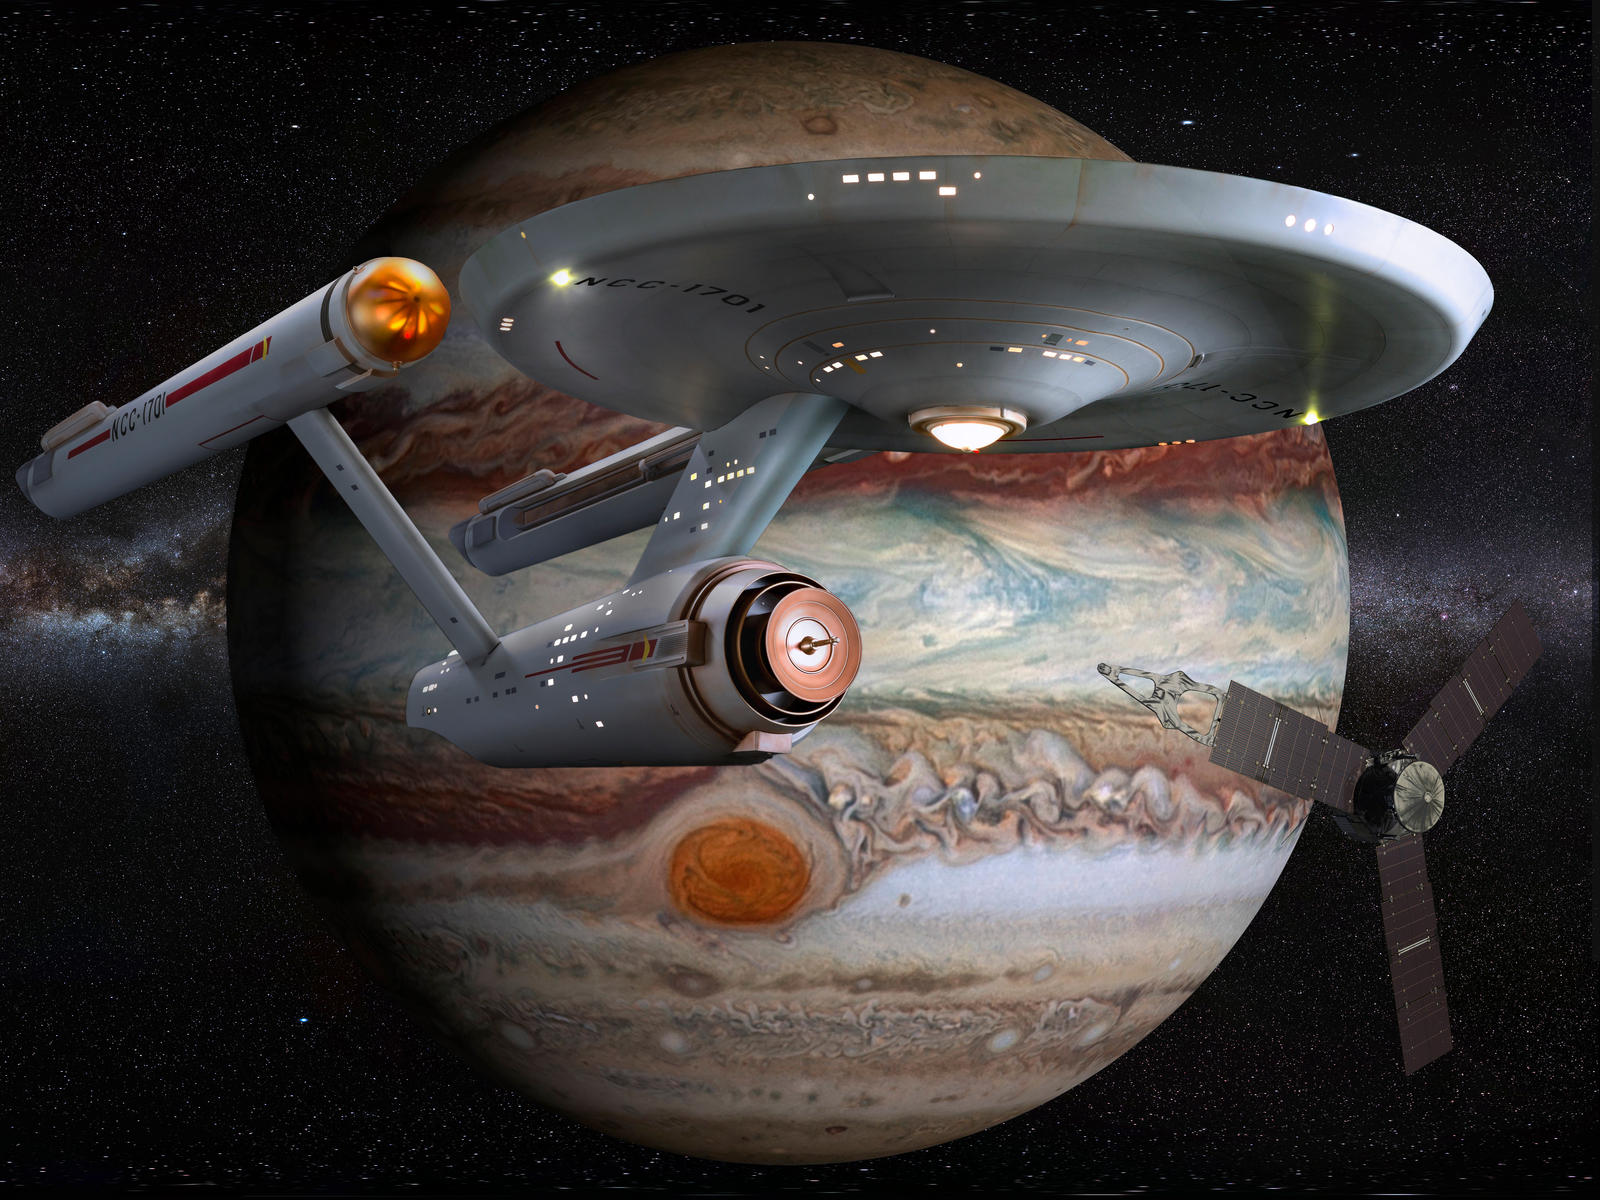 Star Trek USS Enterprise Model Created With Smithsonian's Help